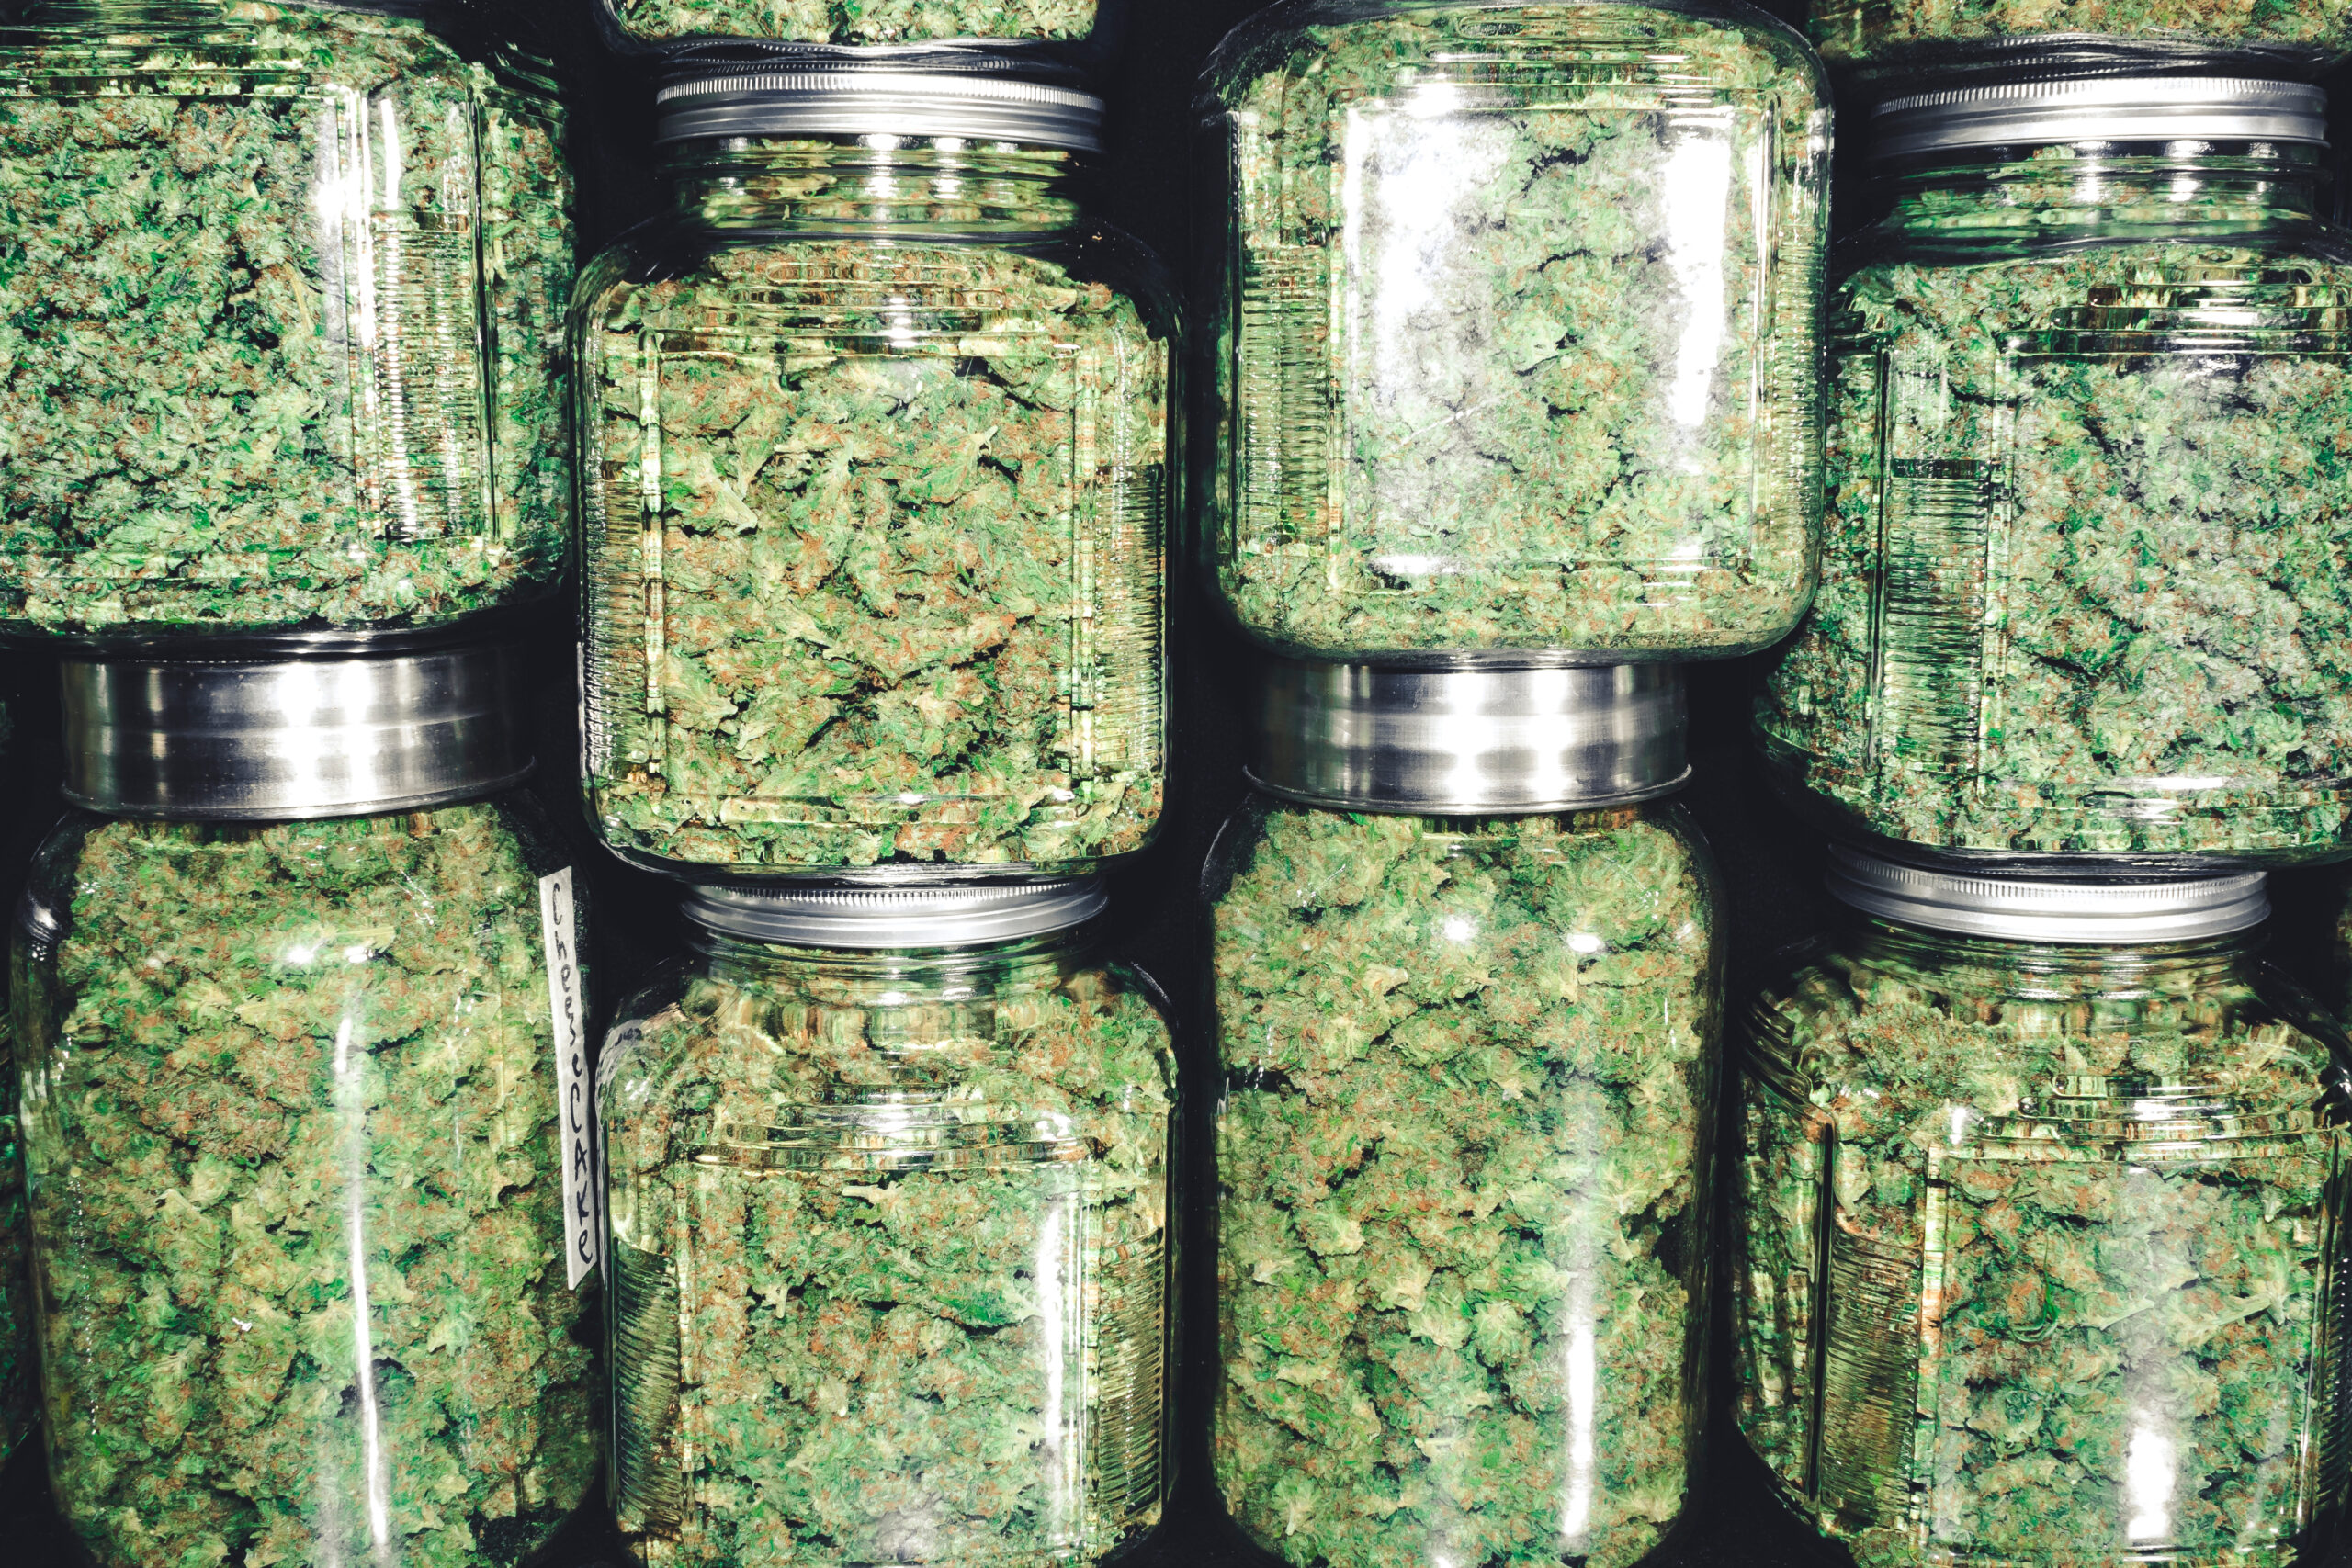 D.C. hit $4.4 million in medical cannabis September revenue